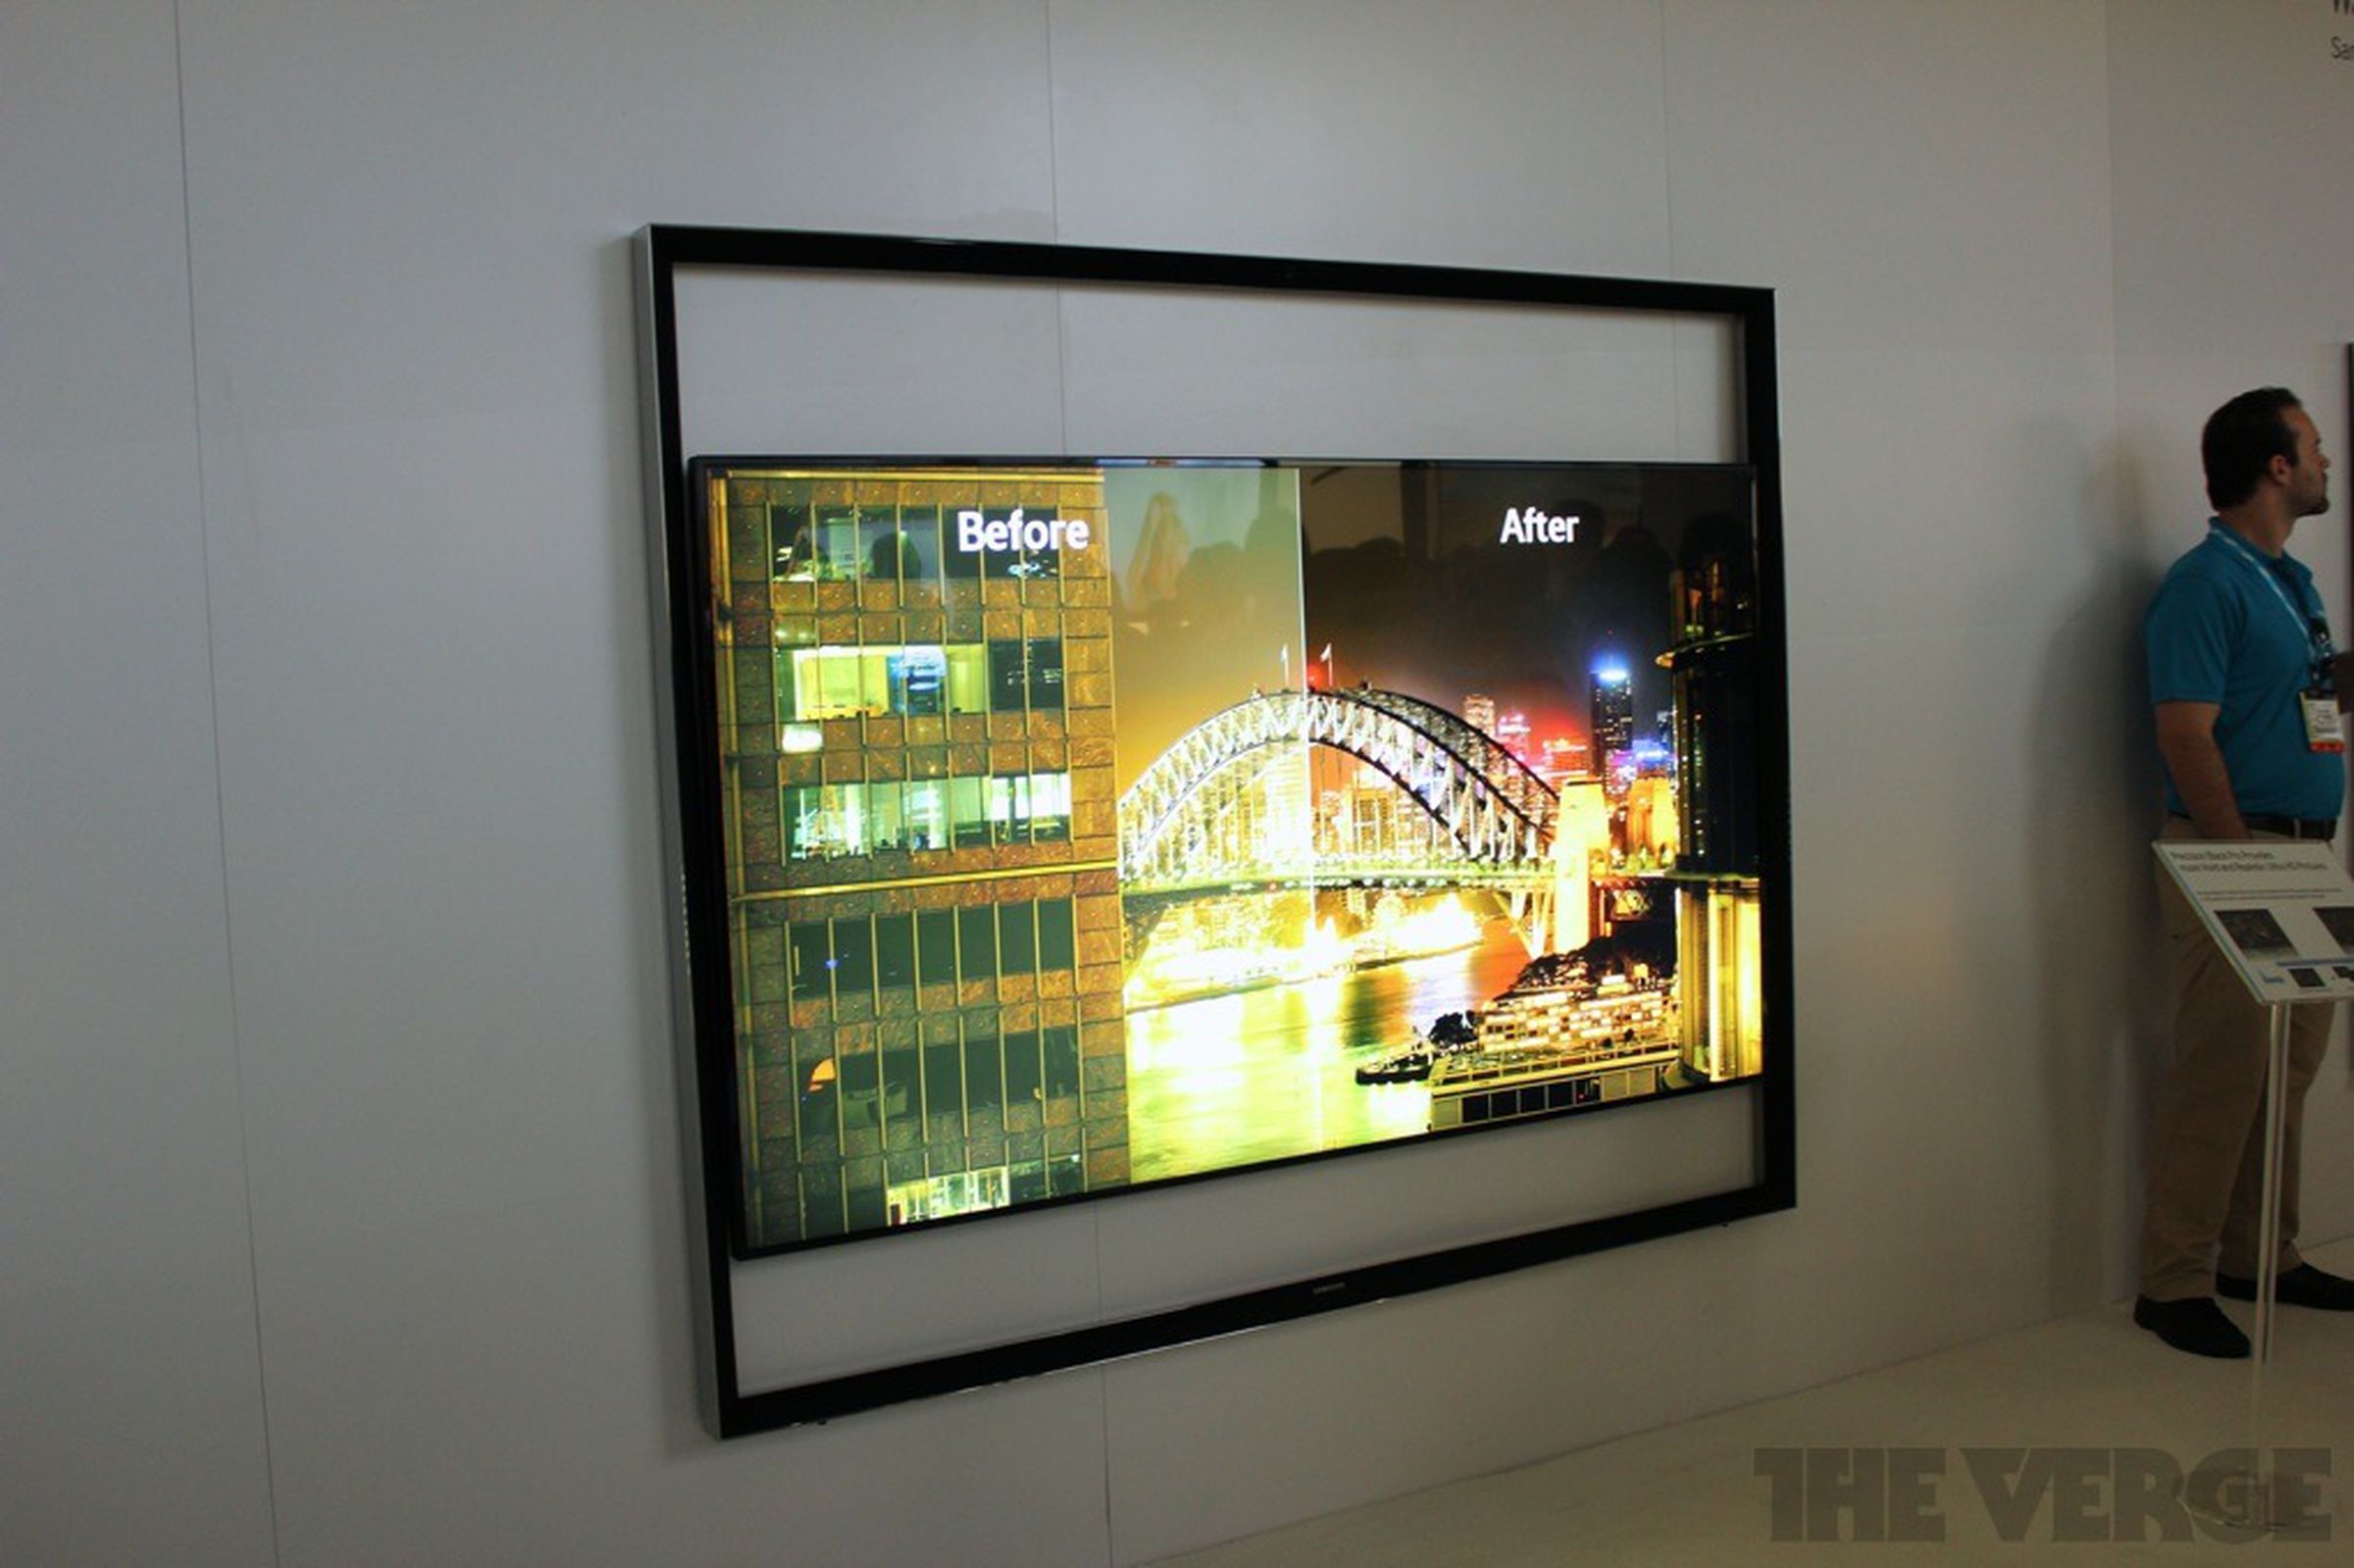 Samsung 'floating' 4K Ultra High-Definition TV photos